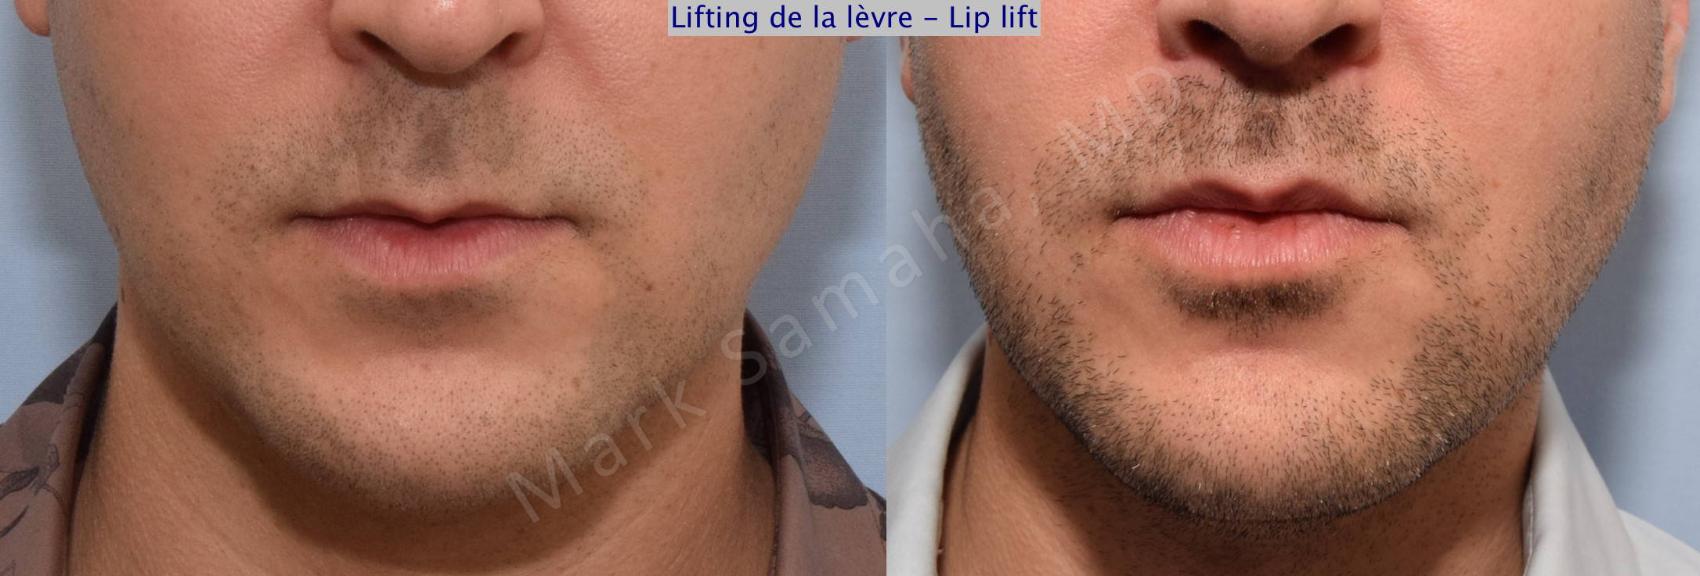 Before & After Lifting de la lèvre supérieure / Lip Lift  Case 72 View #1 View in Montreal, QC